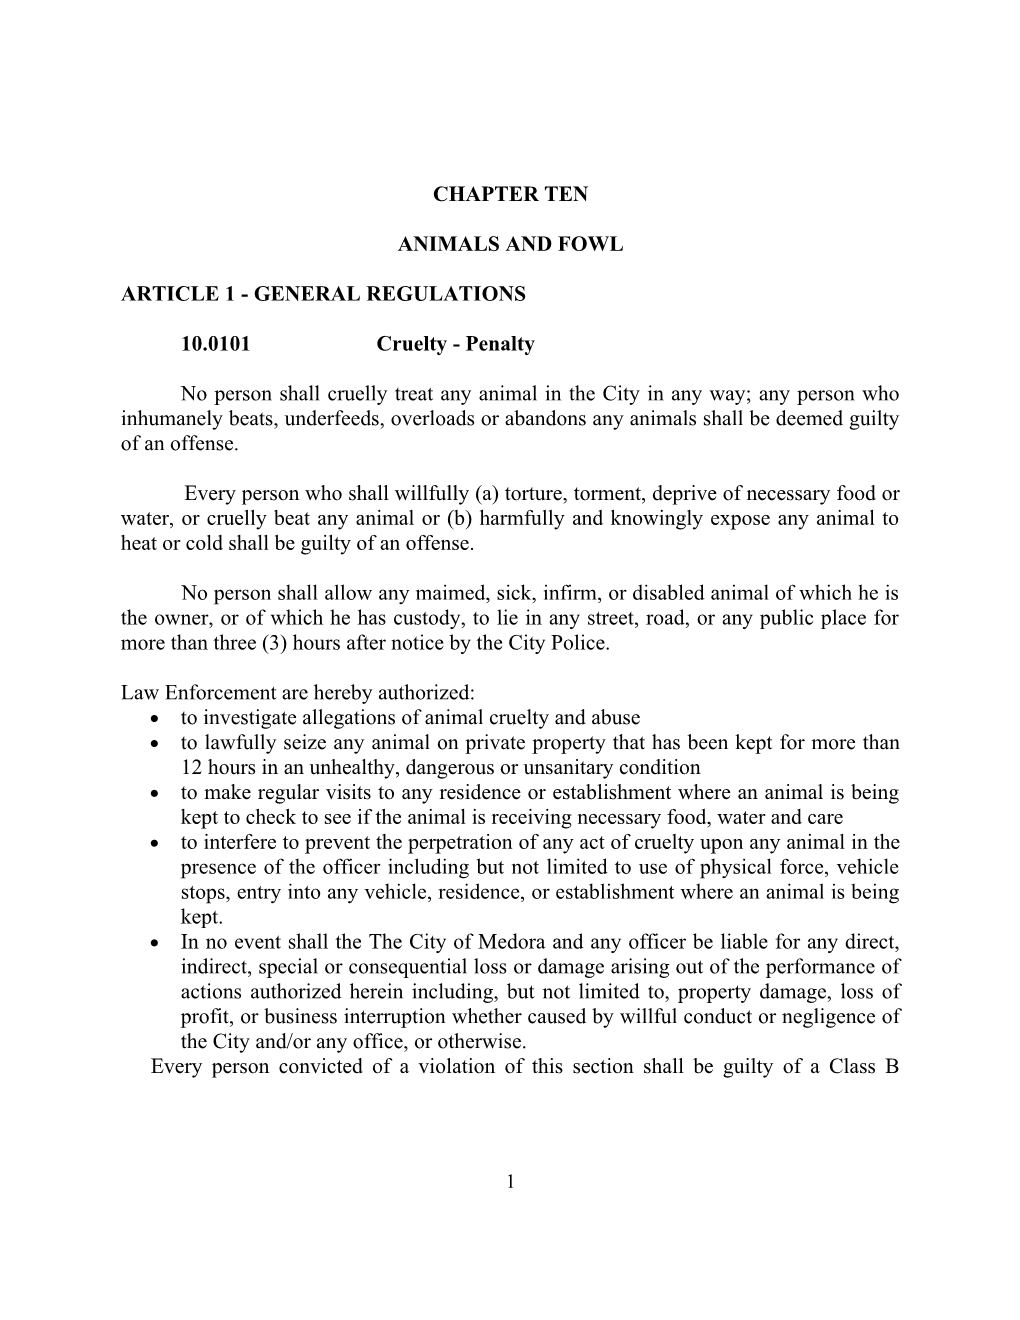 Article 1 - General Regulations